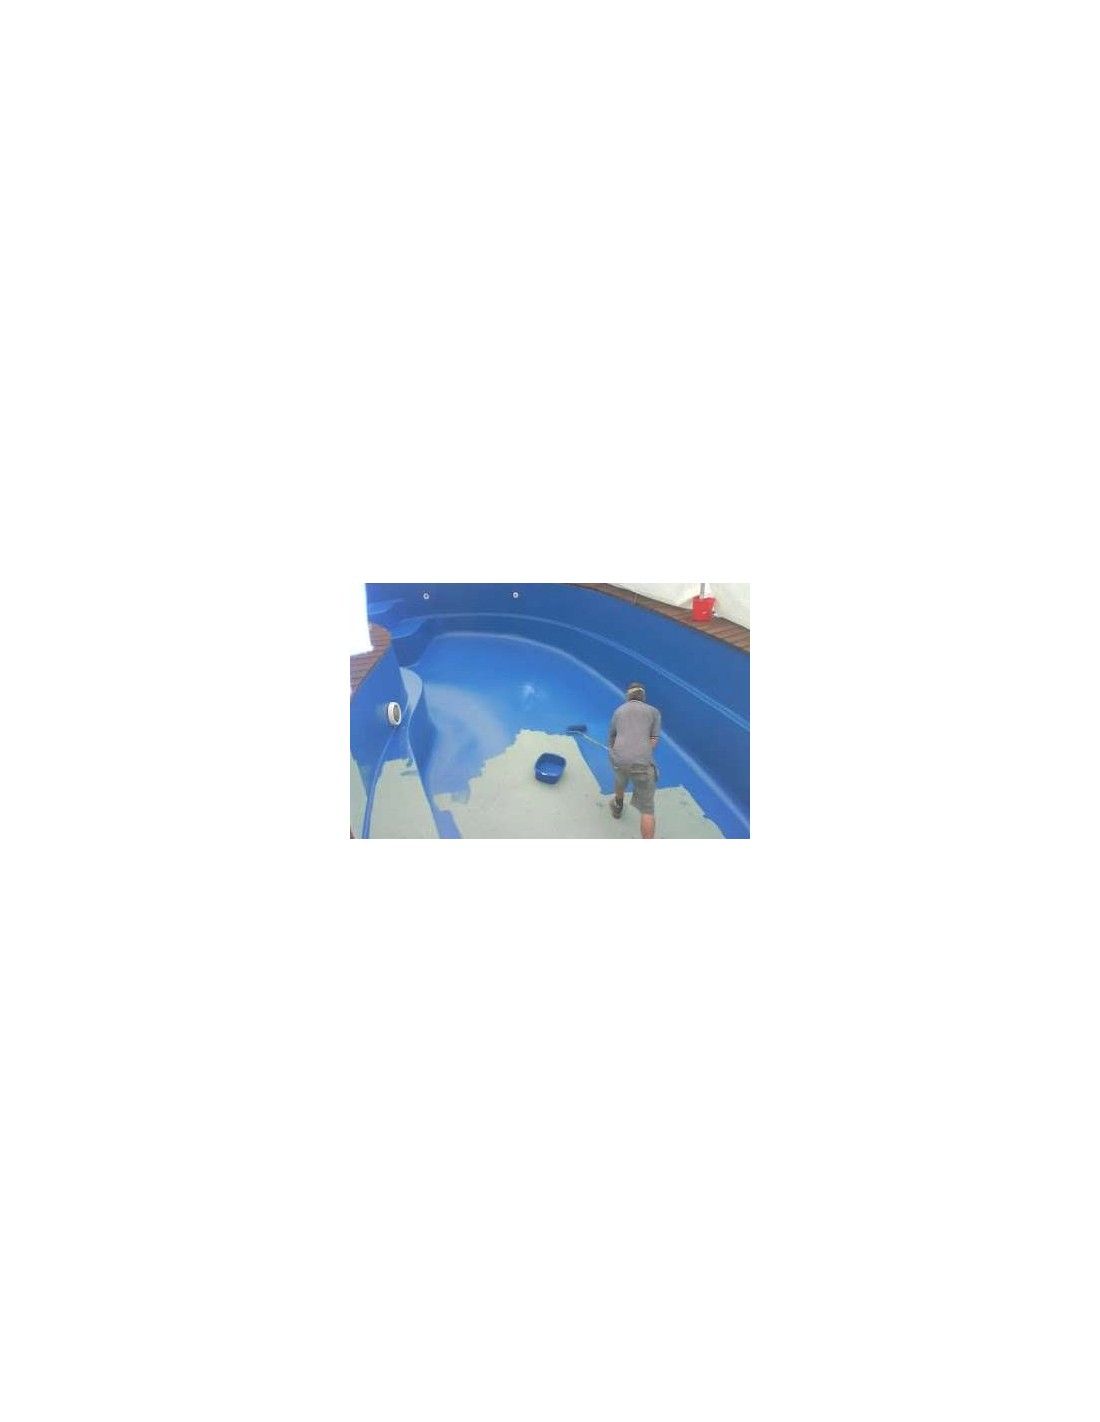 Tinta da piscina do poliuretano 2c (membrana, telhas, Pvc)